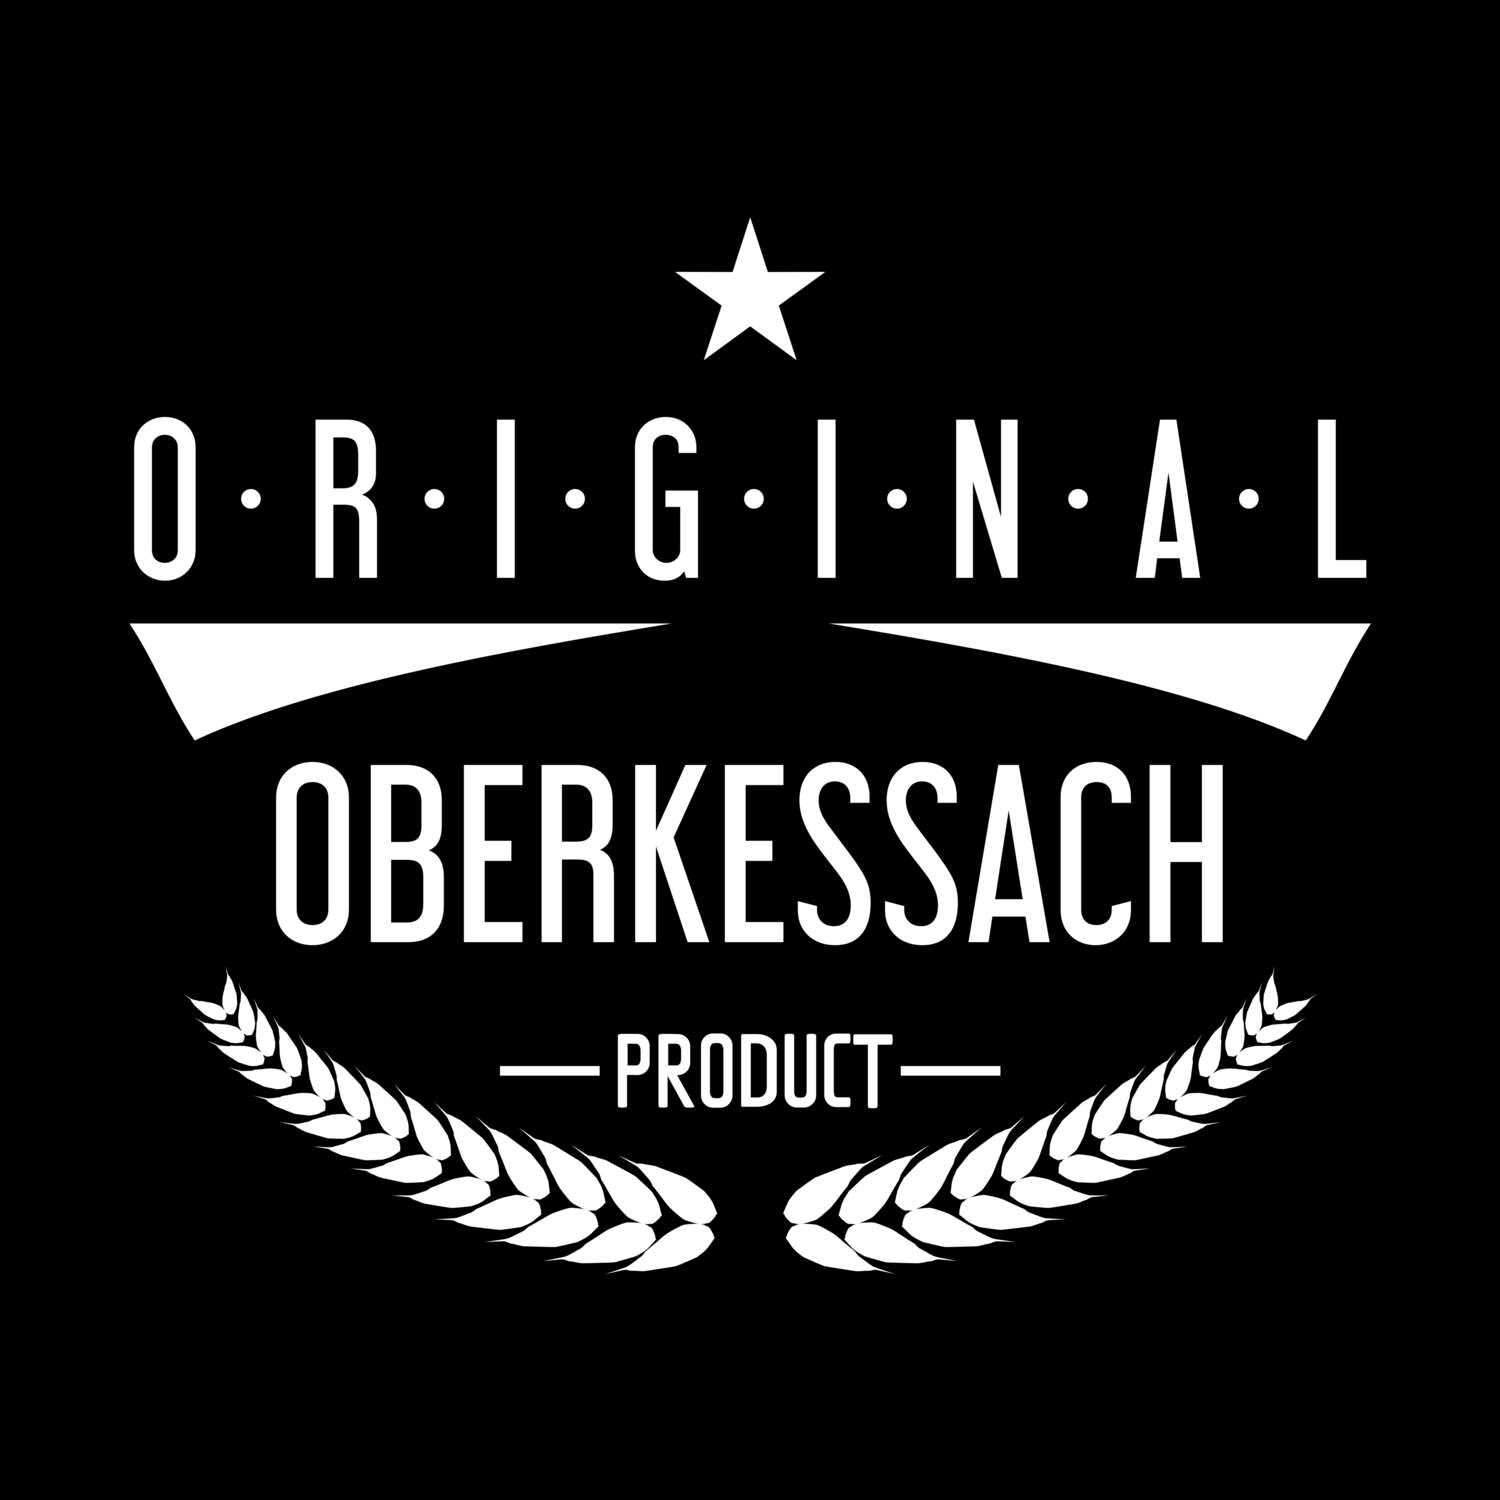 Oberkessach T-Shirt »Original Product«